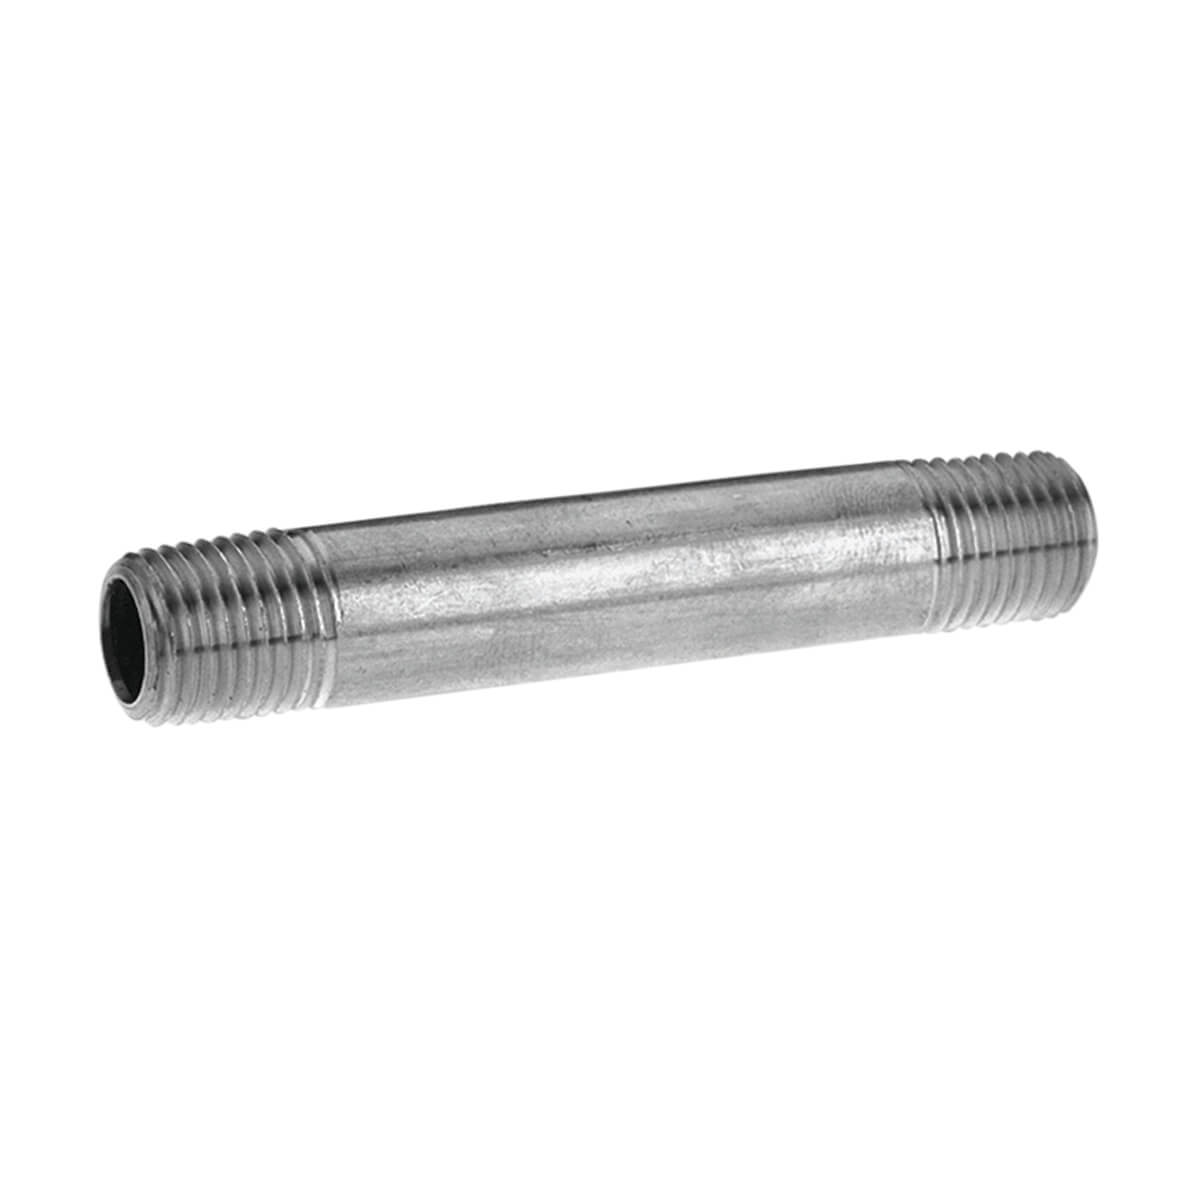 Pipe Nipple Galvanized Steel - 1-1/4-in x 3-1/2-in